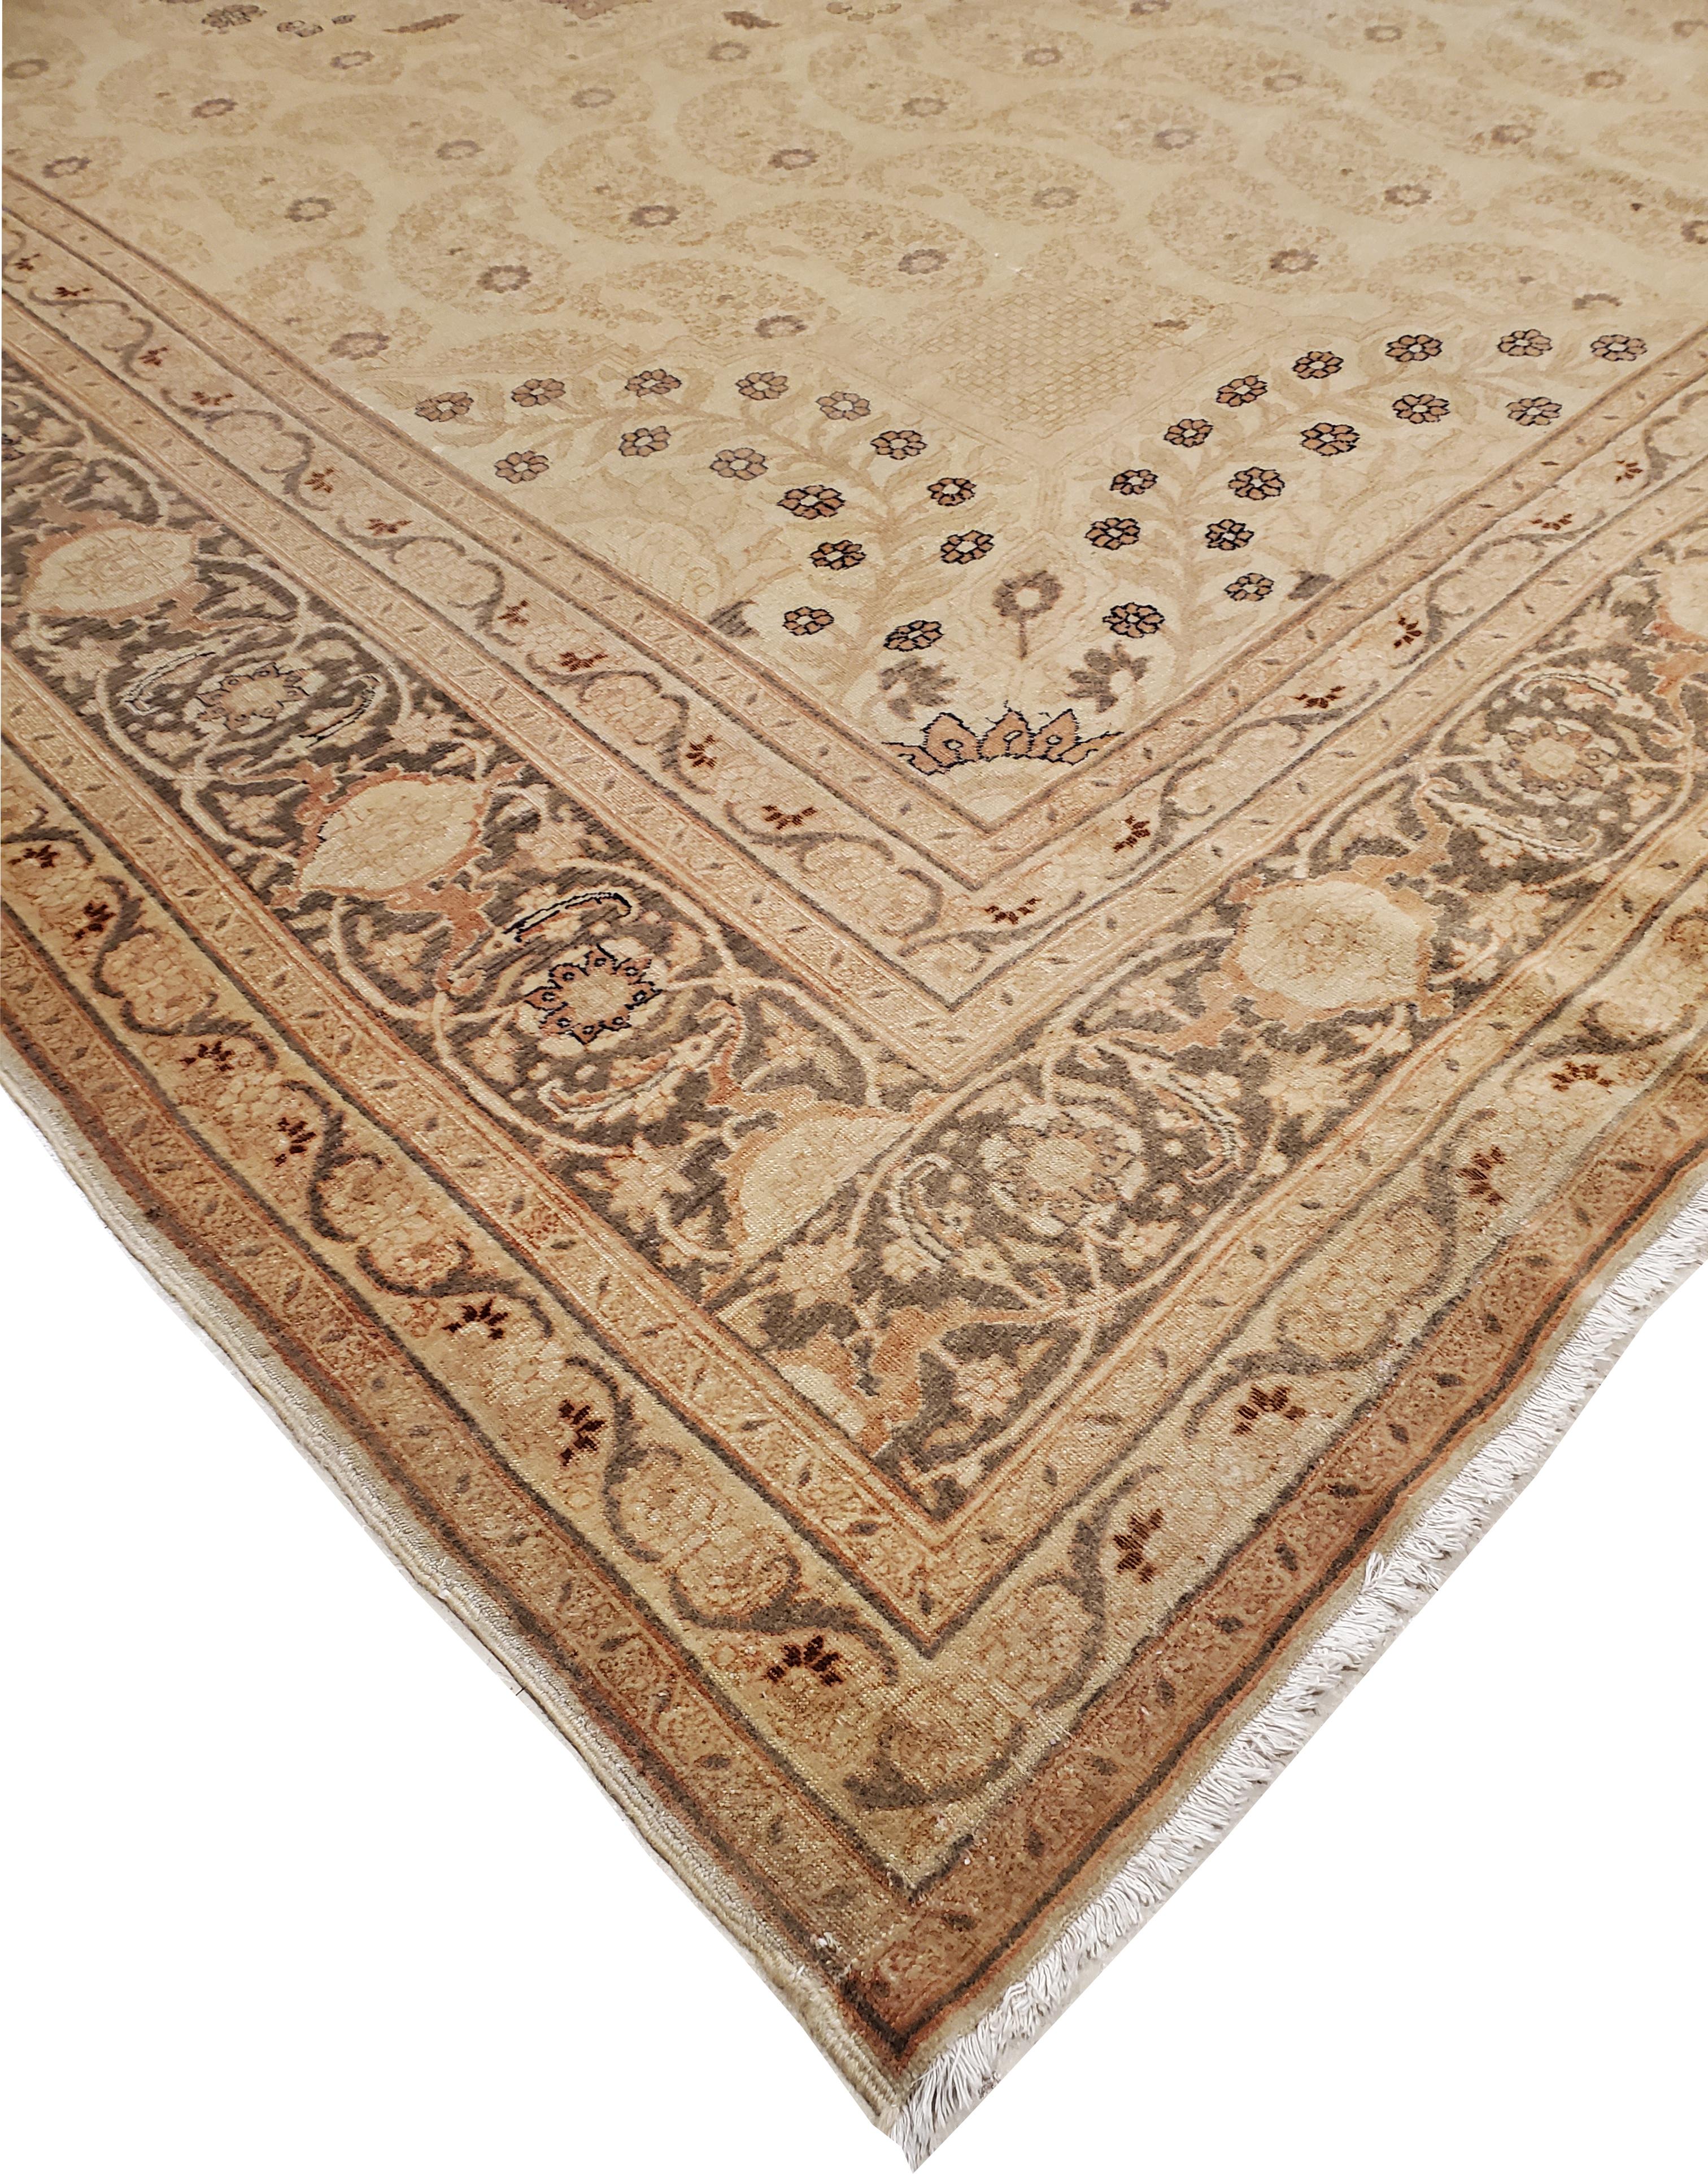 Hand-Knotted Antique Tabriz Carpet, Hadji Jalili Persian Rug, Earth Tones, Ivory, Terracotta For Sale